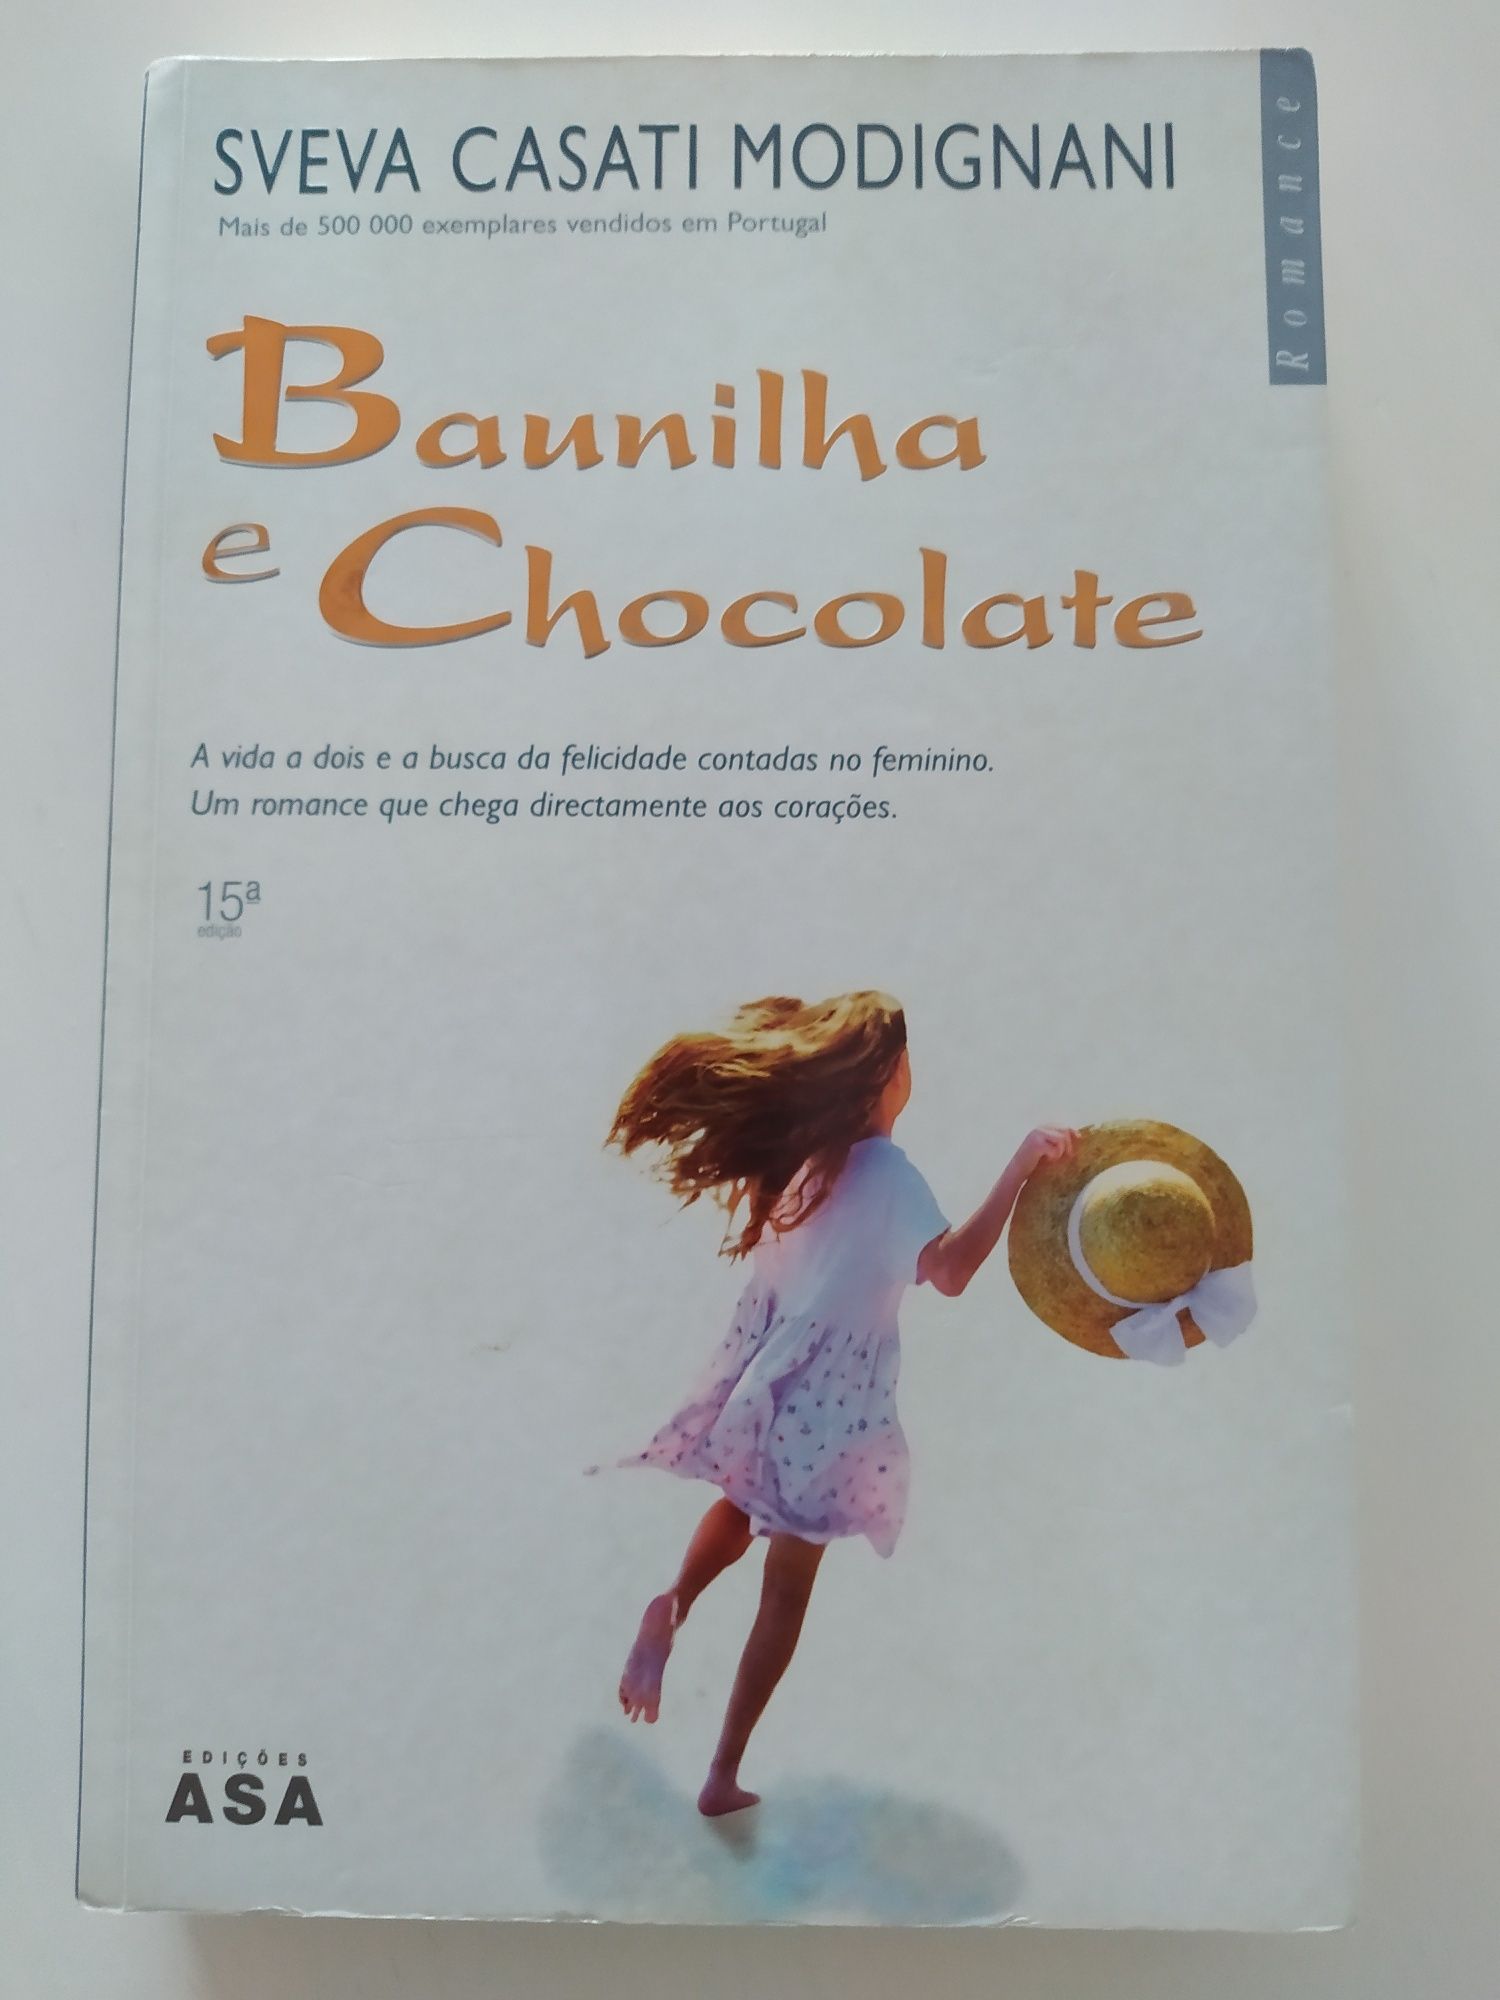 Baunilha e Chocolate Sveva Casati Modignani